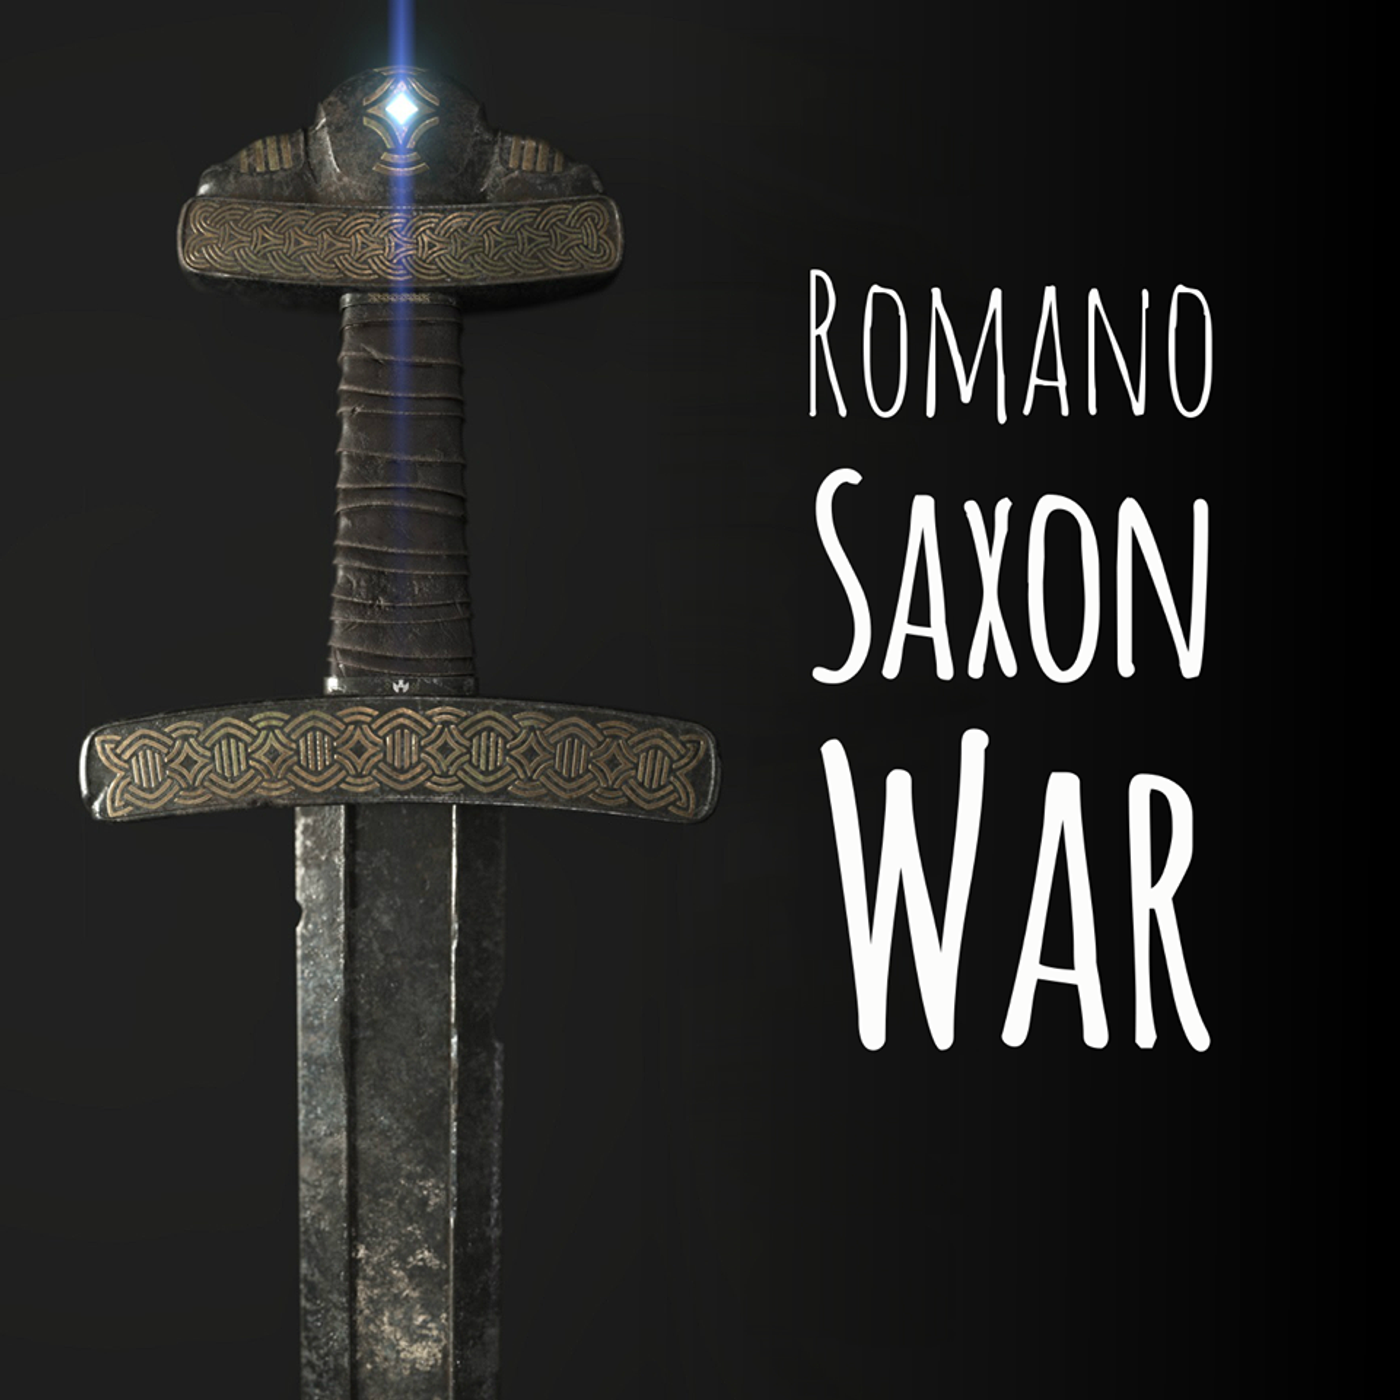 Romano Saxon War, Part 12